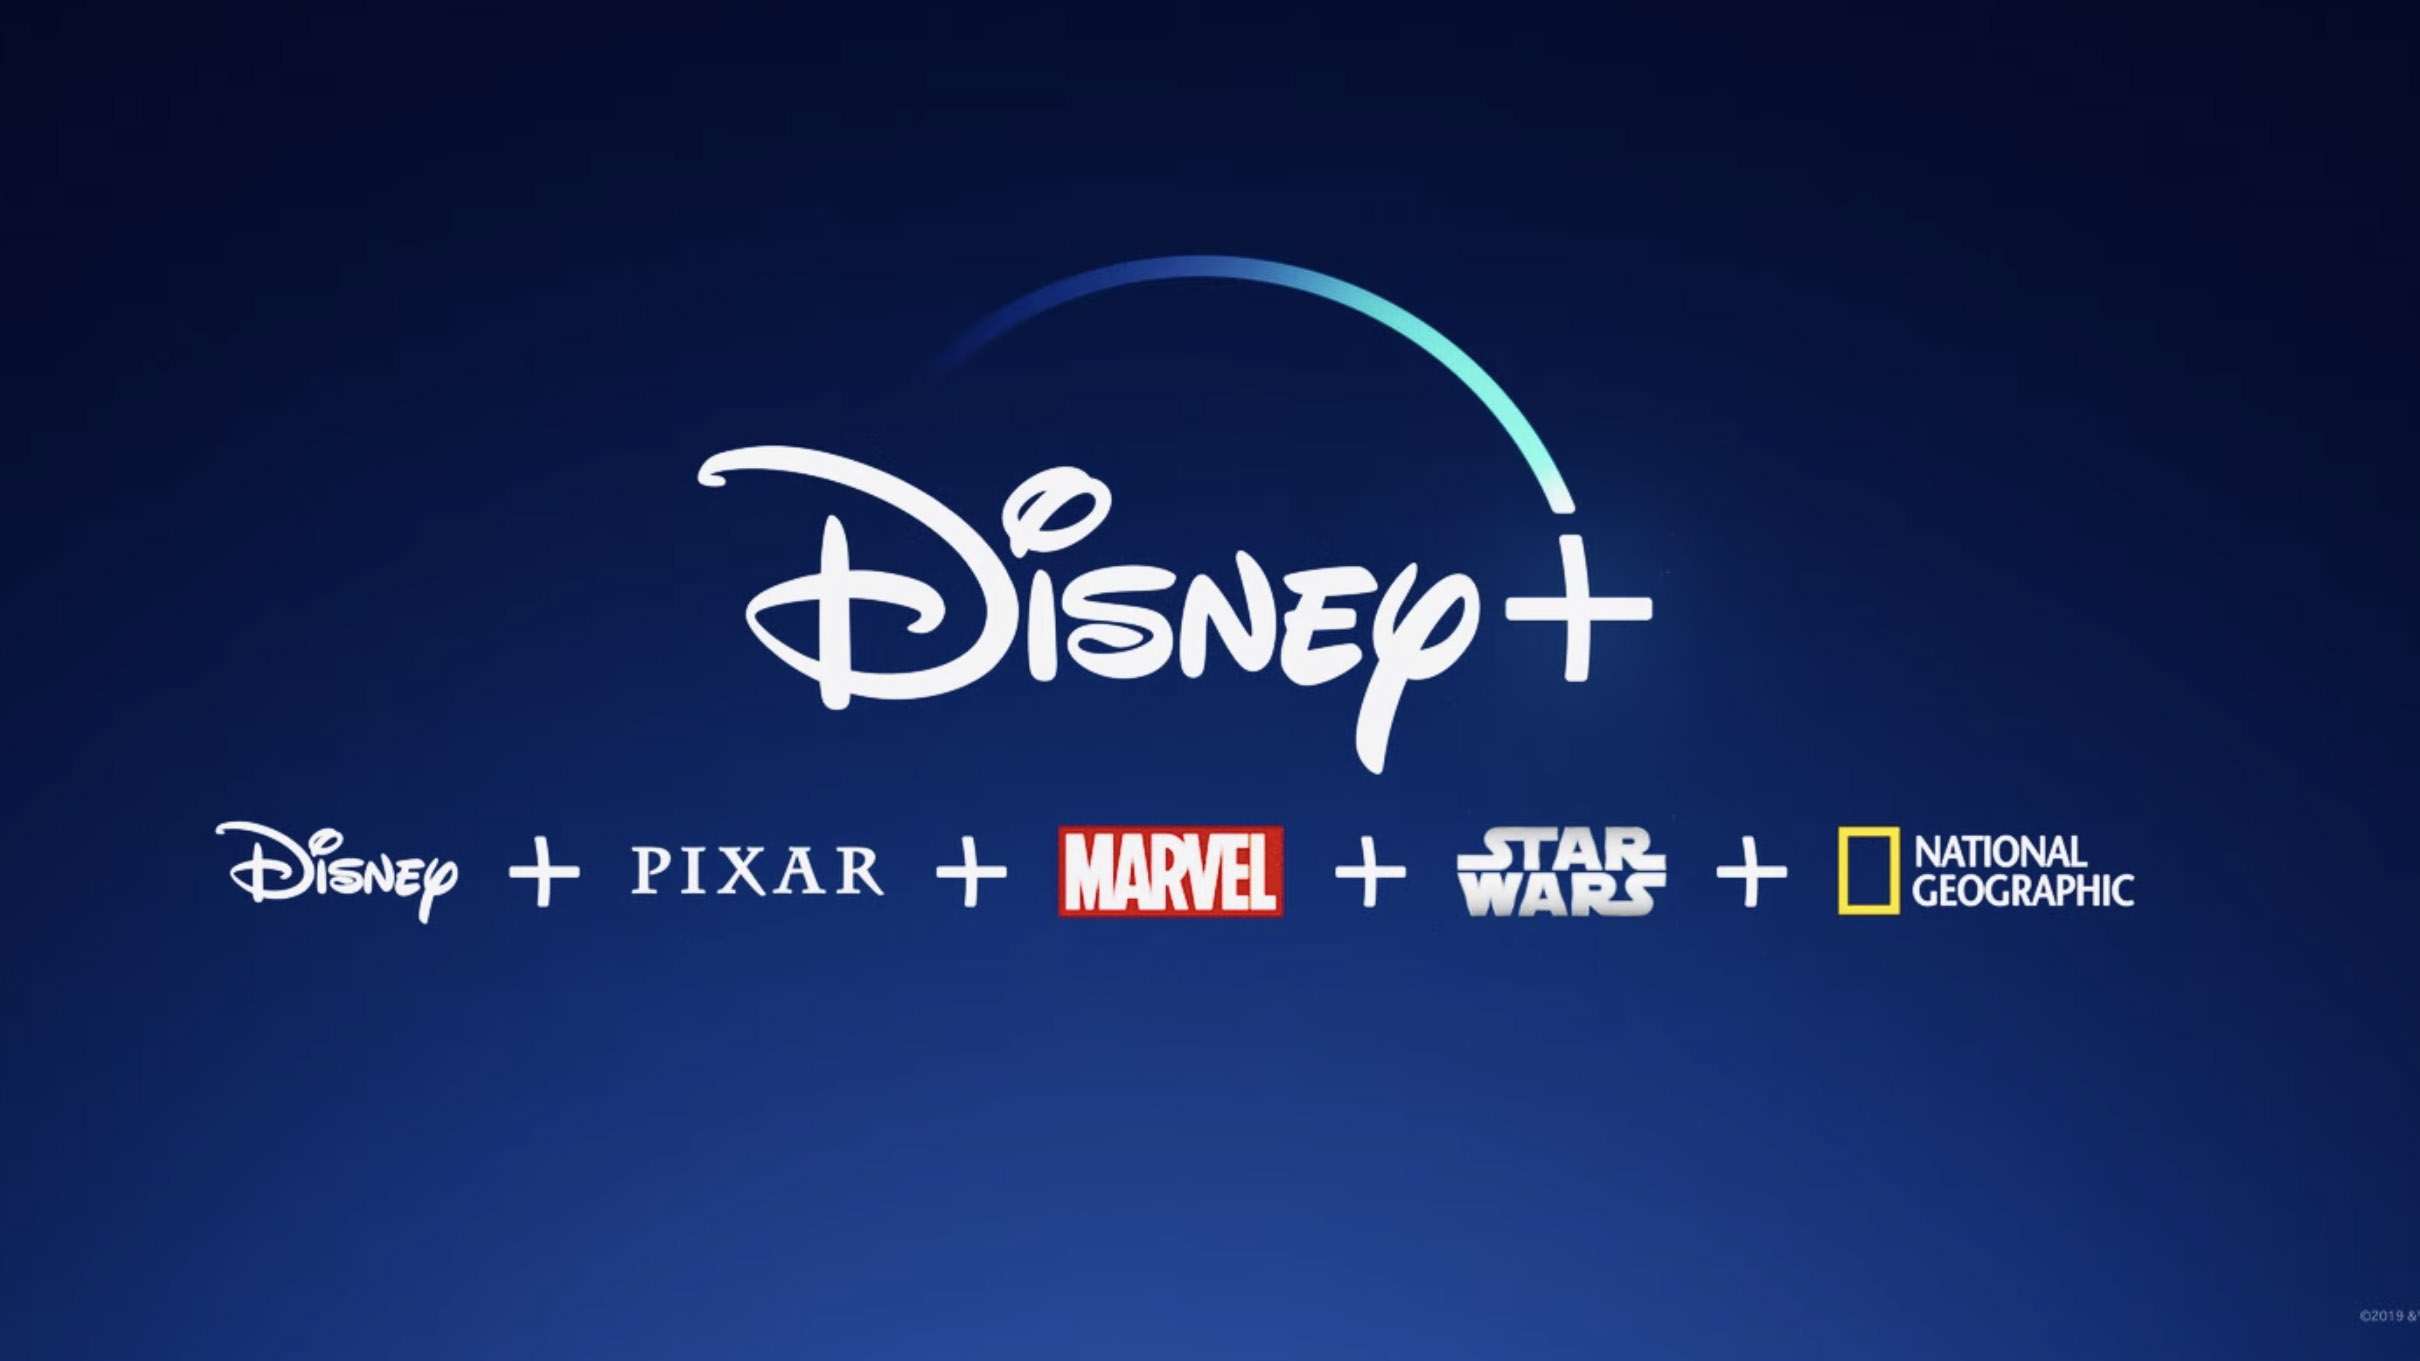 Disney Plus and its major properties